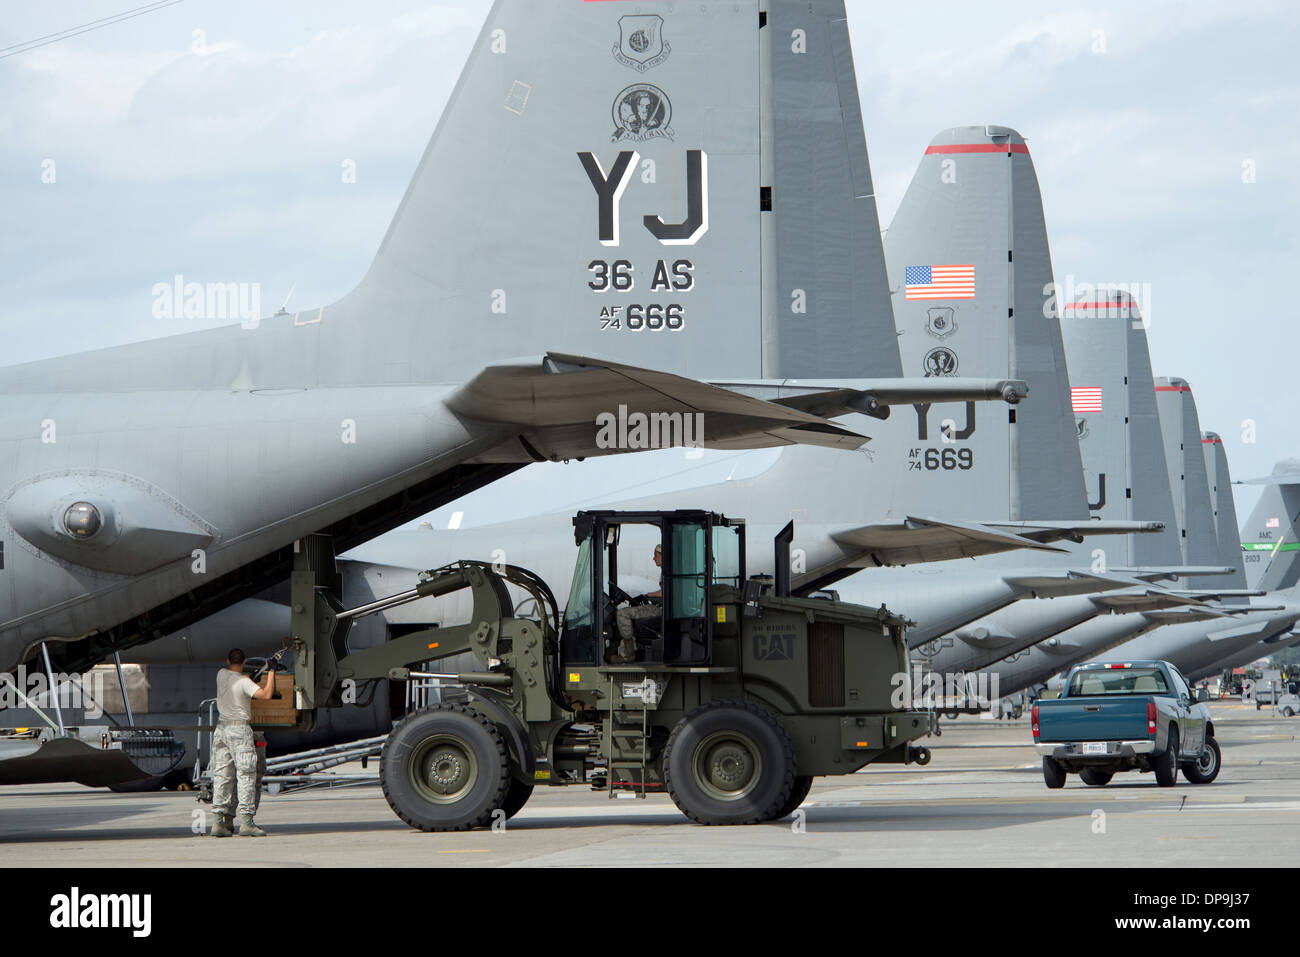 US Air Force Piloten laden ein Low Cost, Low-Altitude Cargo-Paket in einer c-130 Hercules Stockfoto